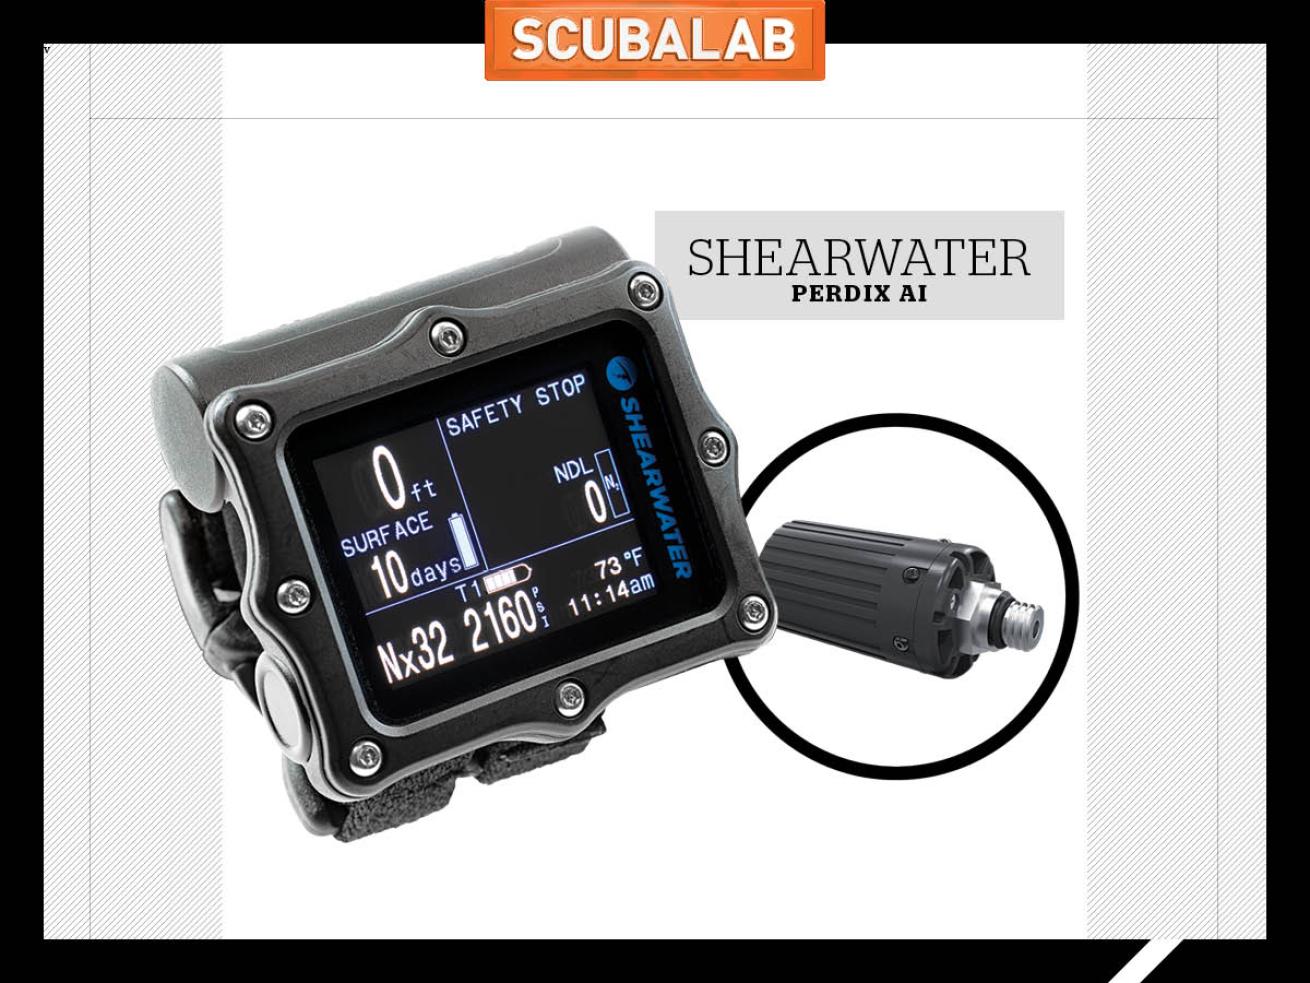 Shearwater Perdix AI scuba diving computer gear